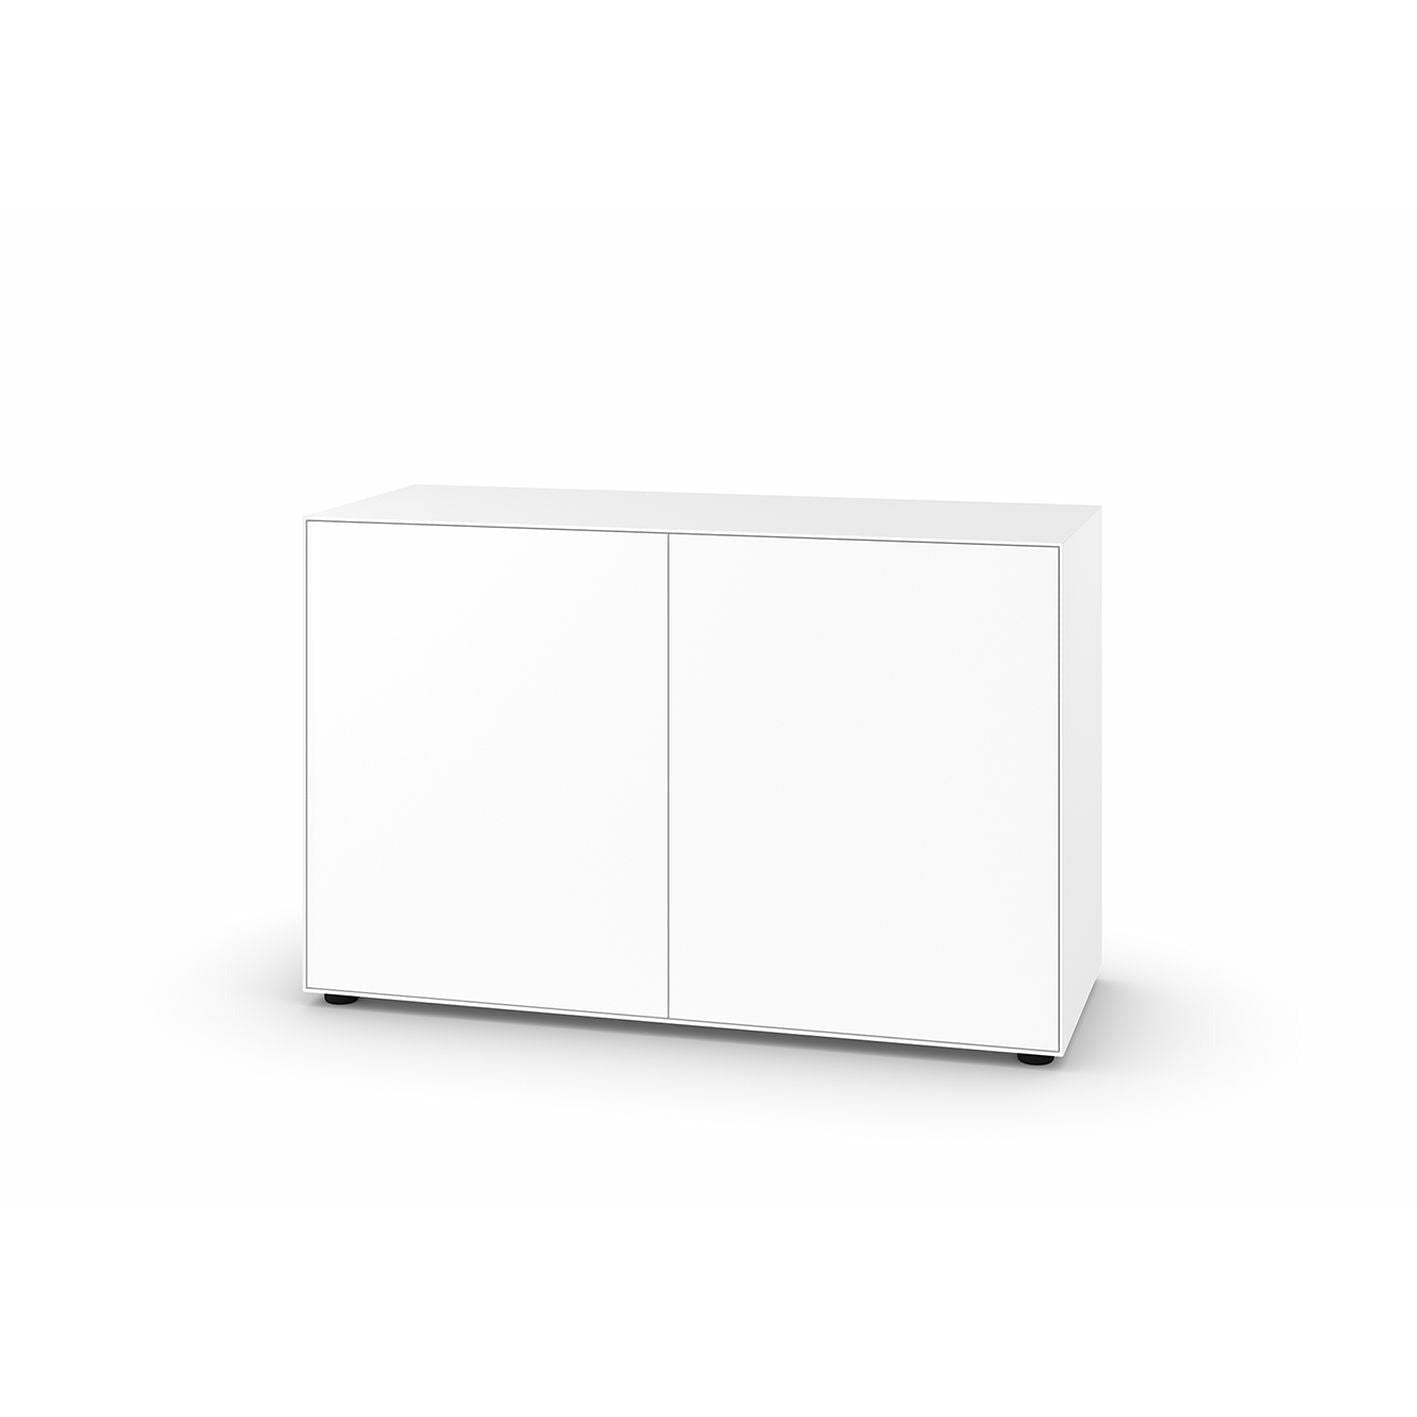 Piure Nex Pur Box Door Hx W 75x120 cm, 1 estante, blanco